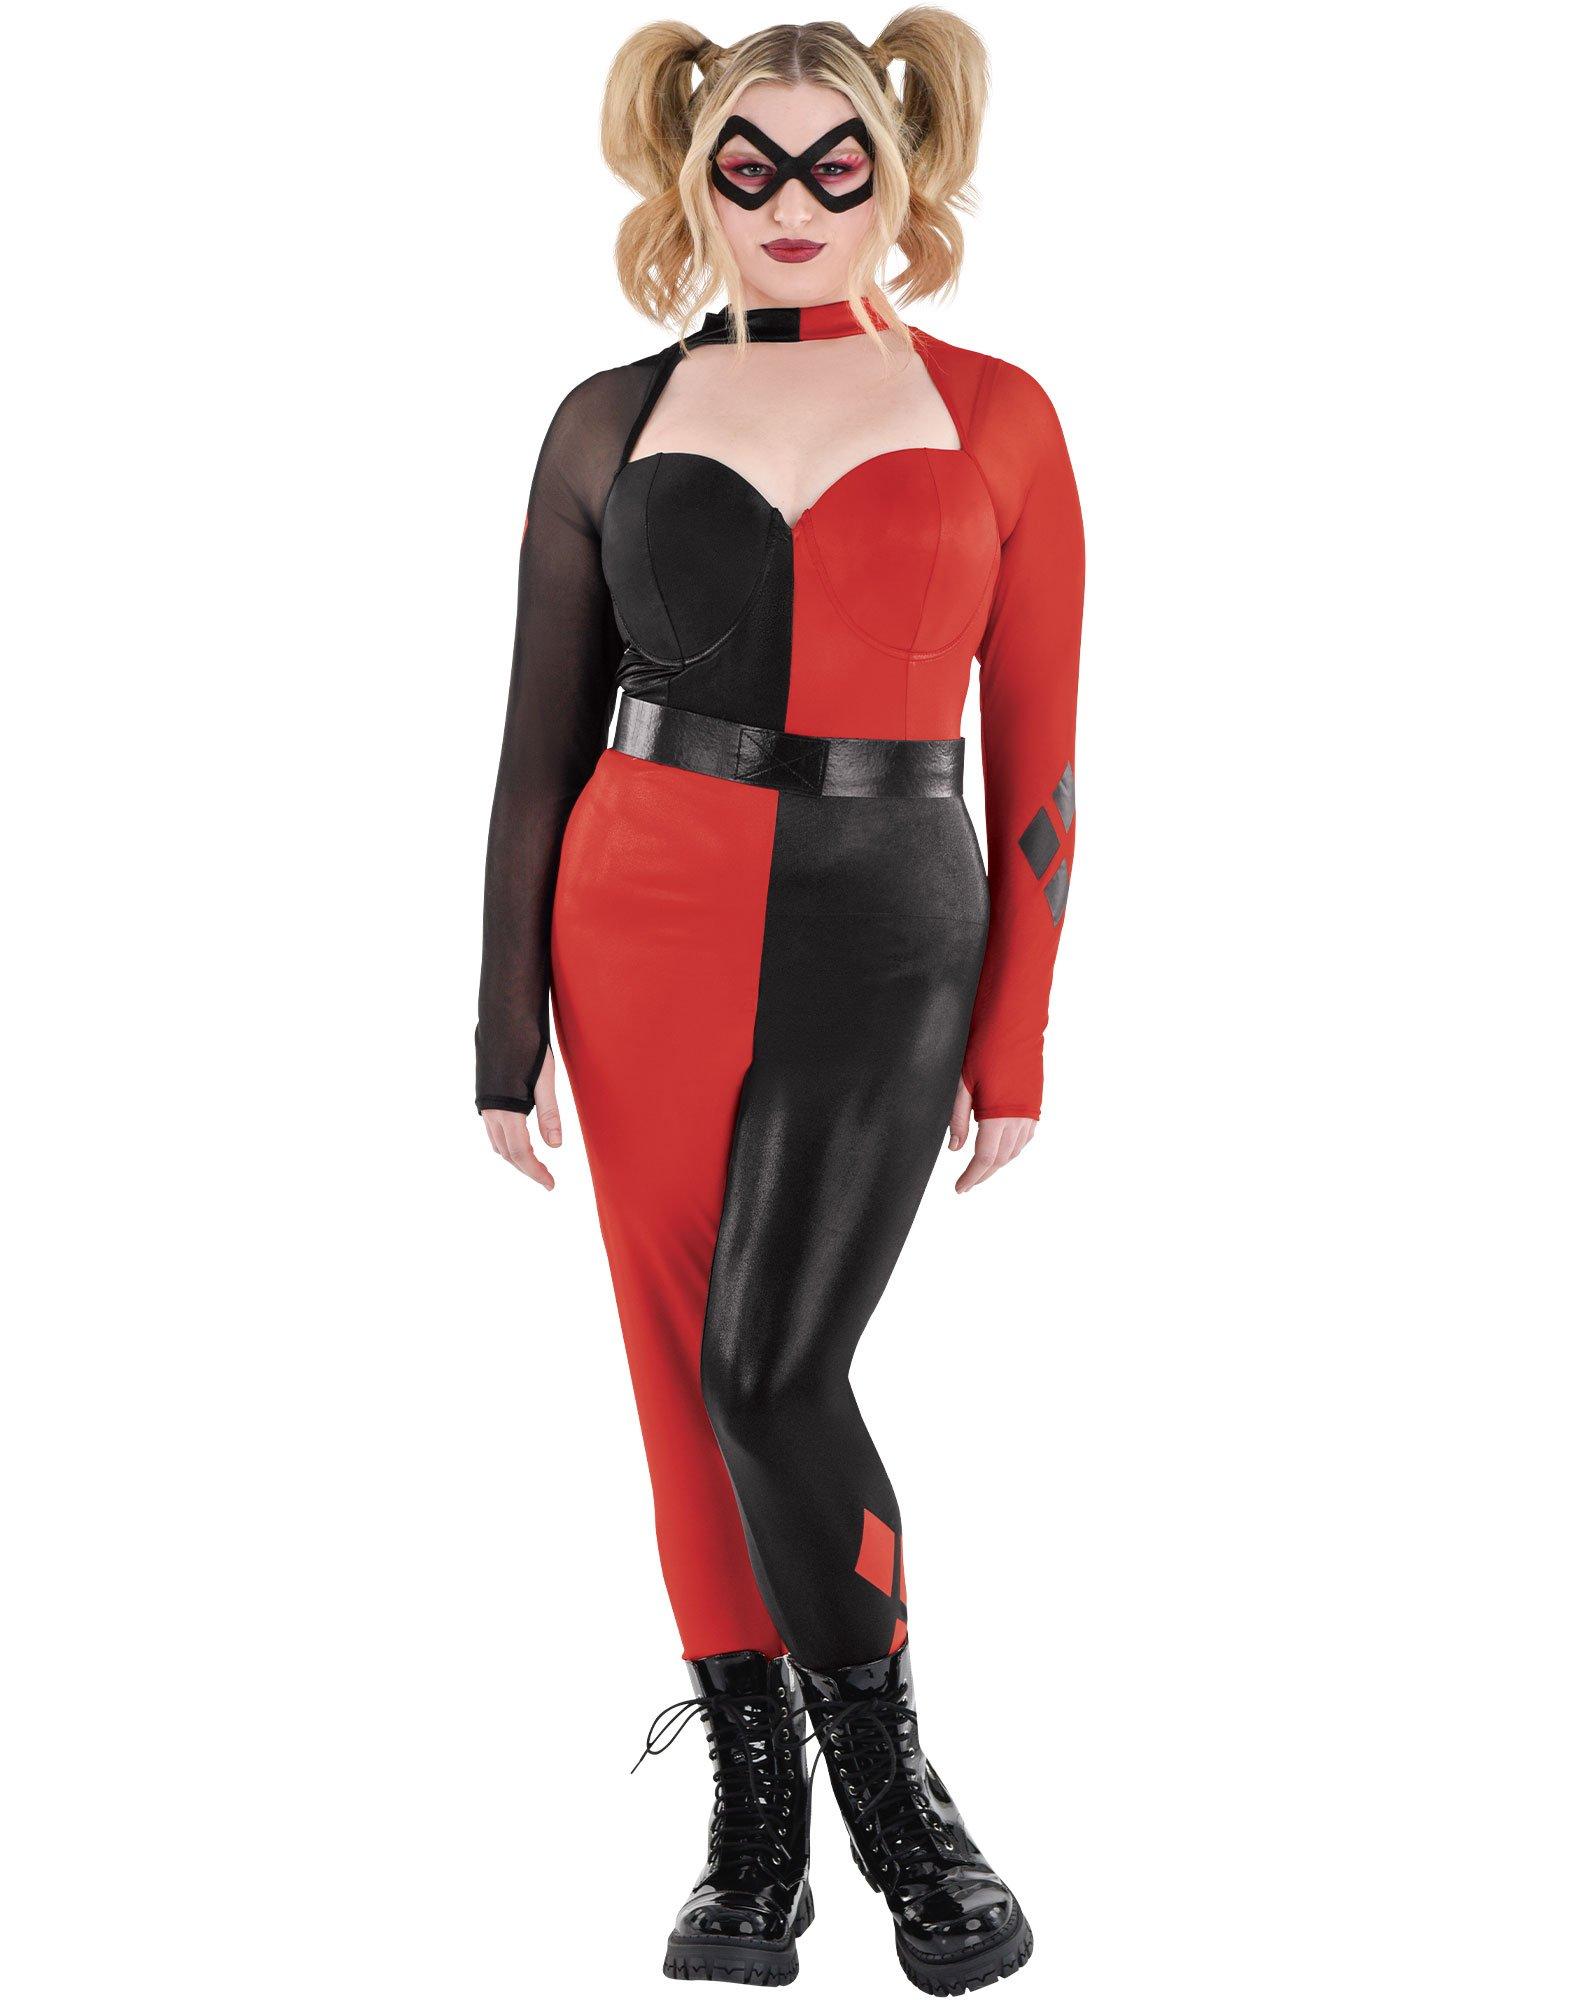 Adult Harley Quinn Plus Size Costume - DC Comics